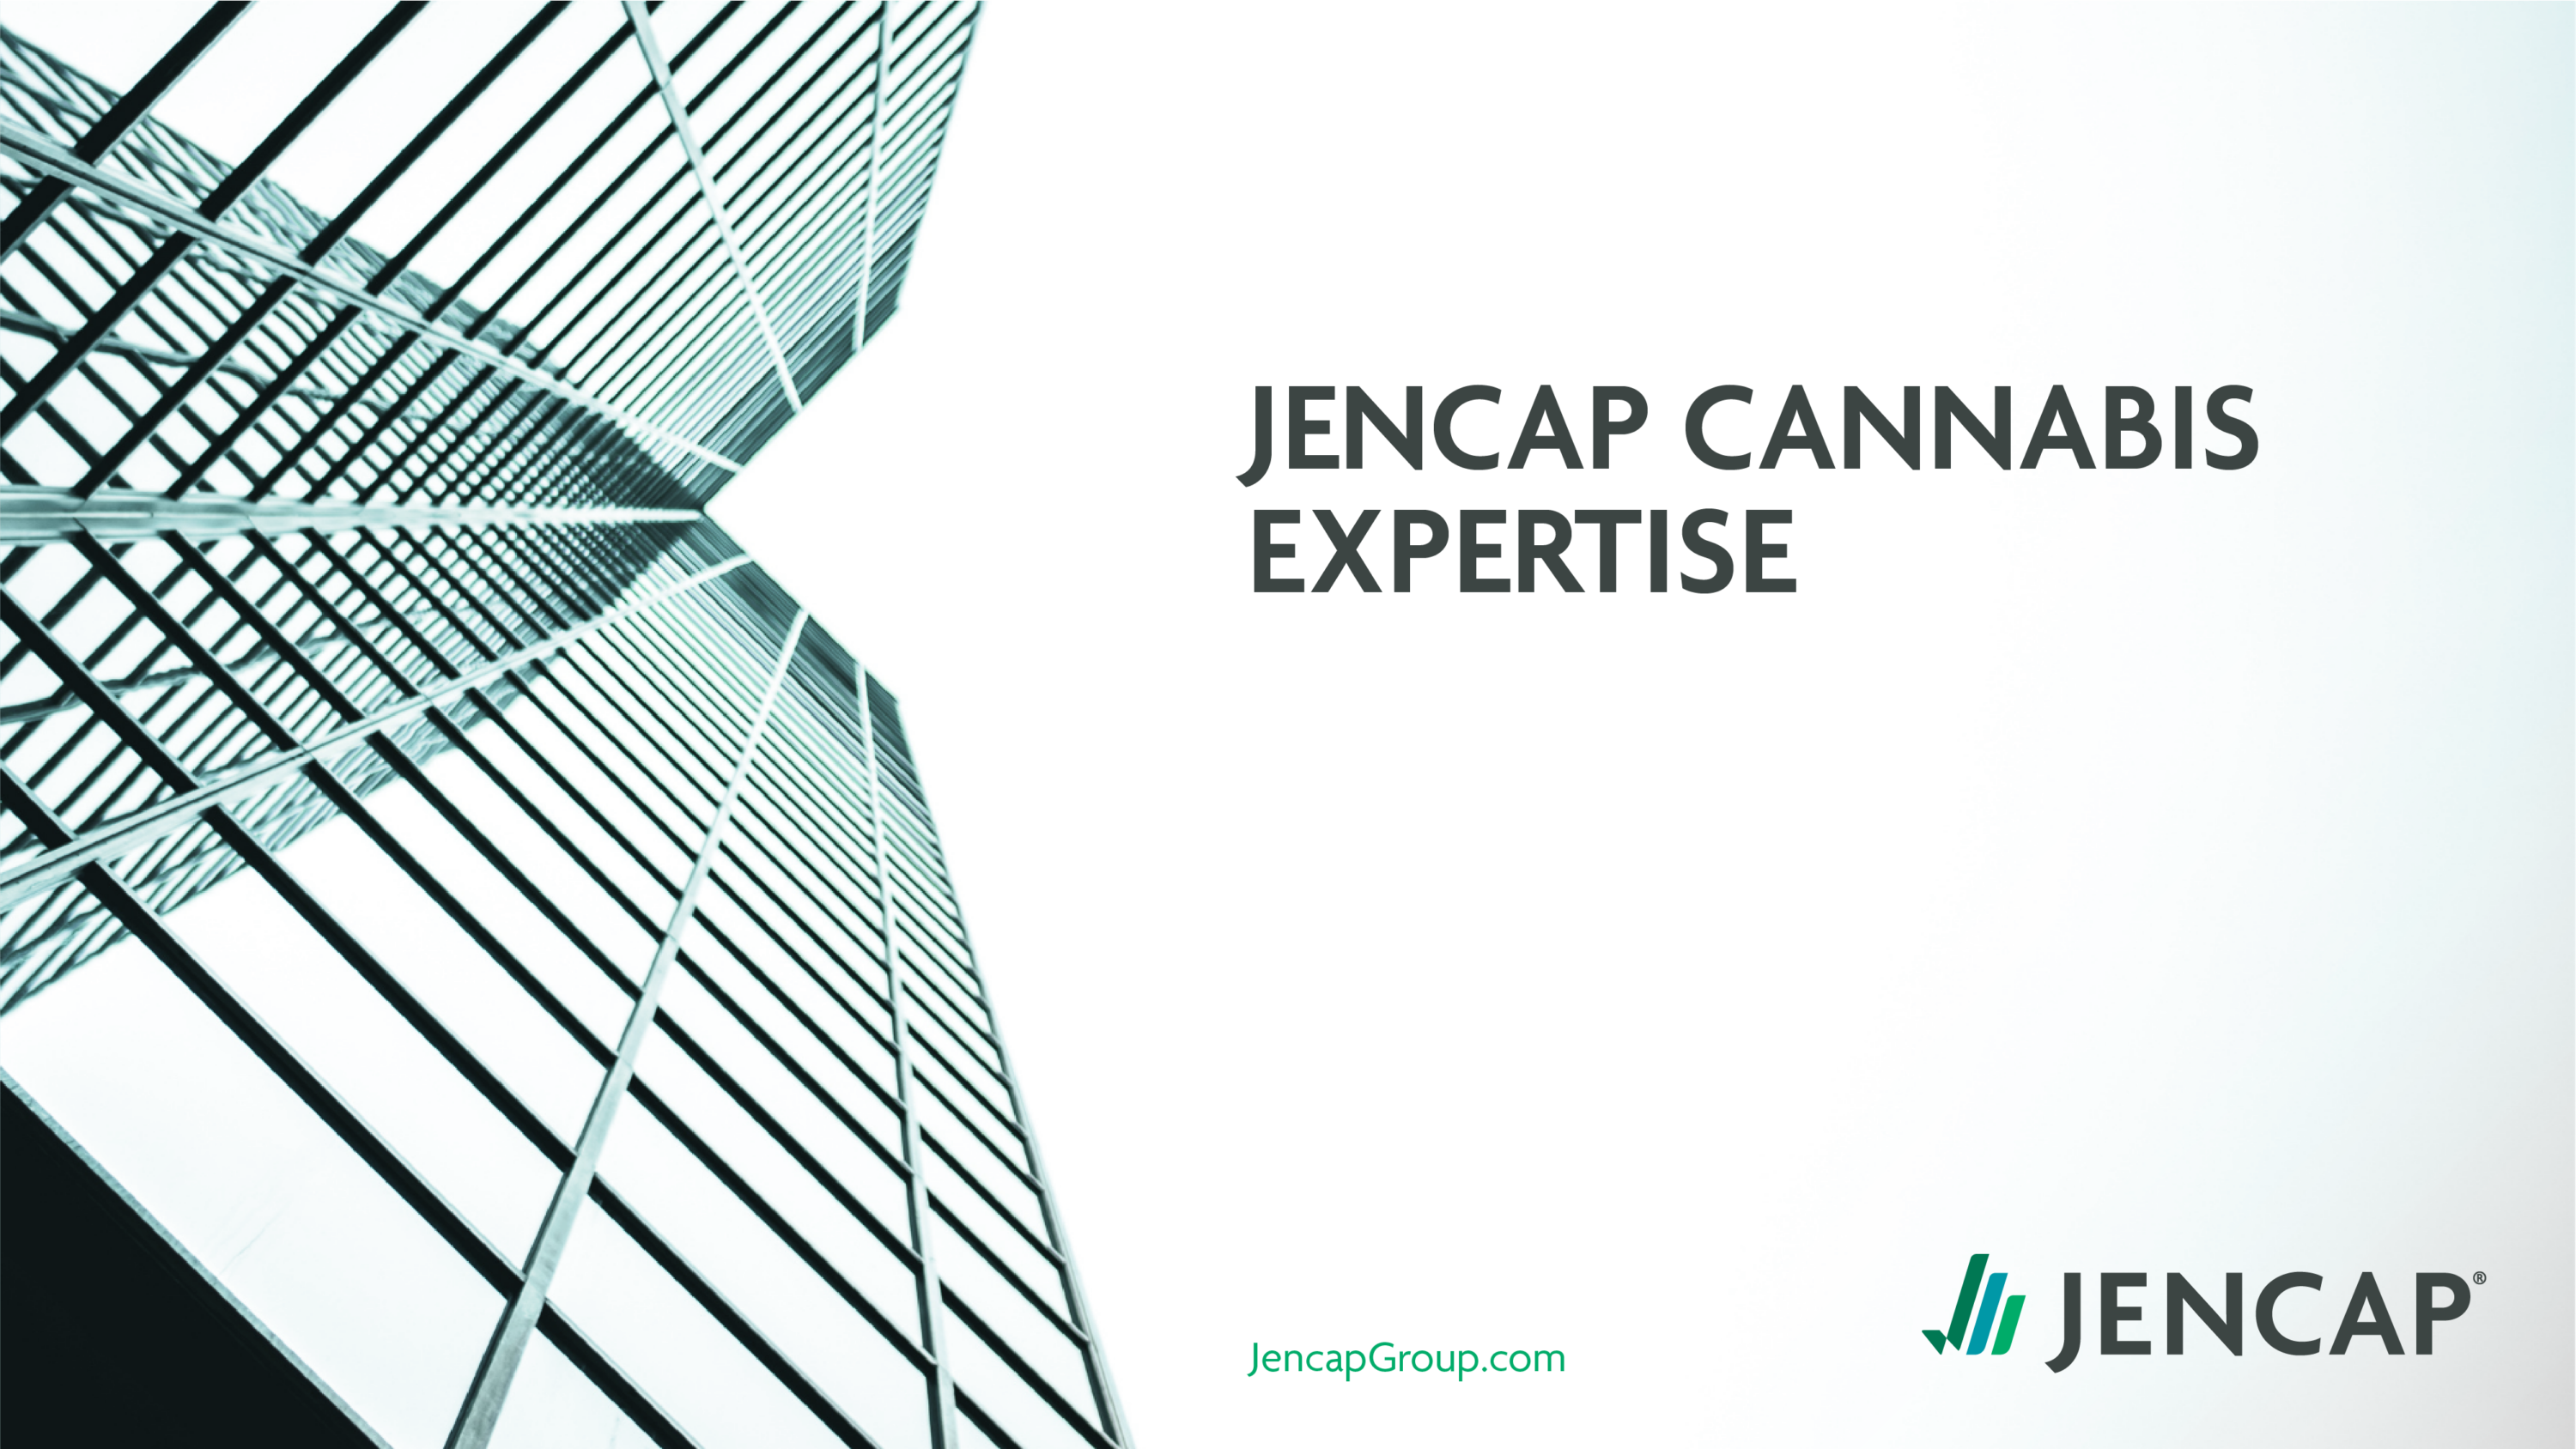 Jencap Cannabis Expertise